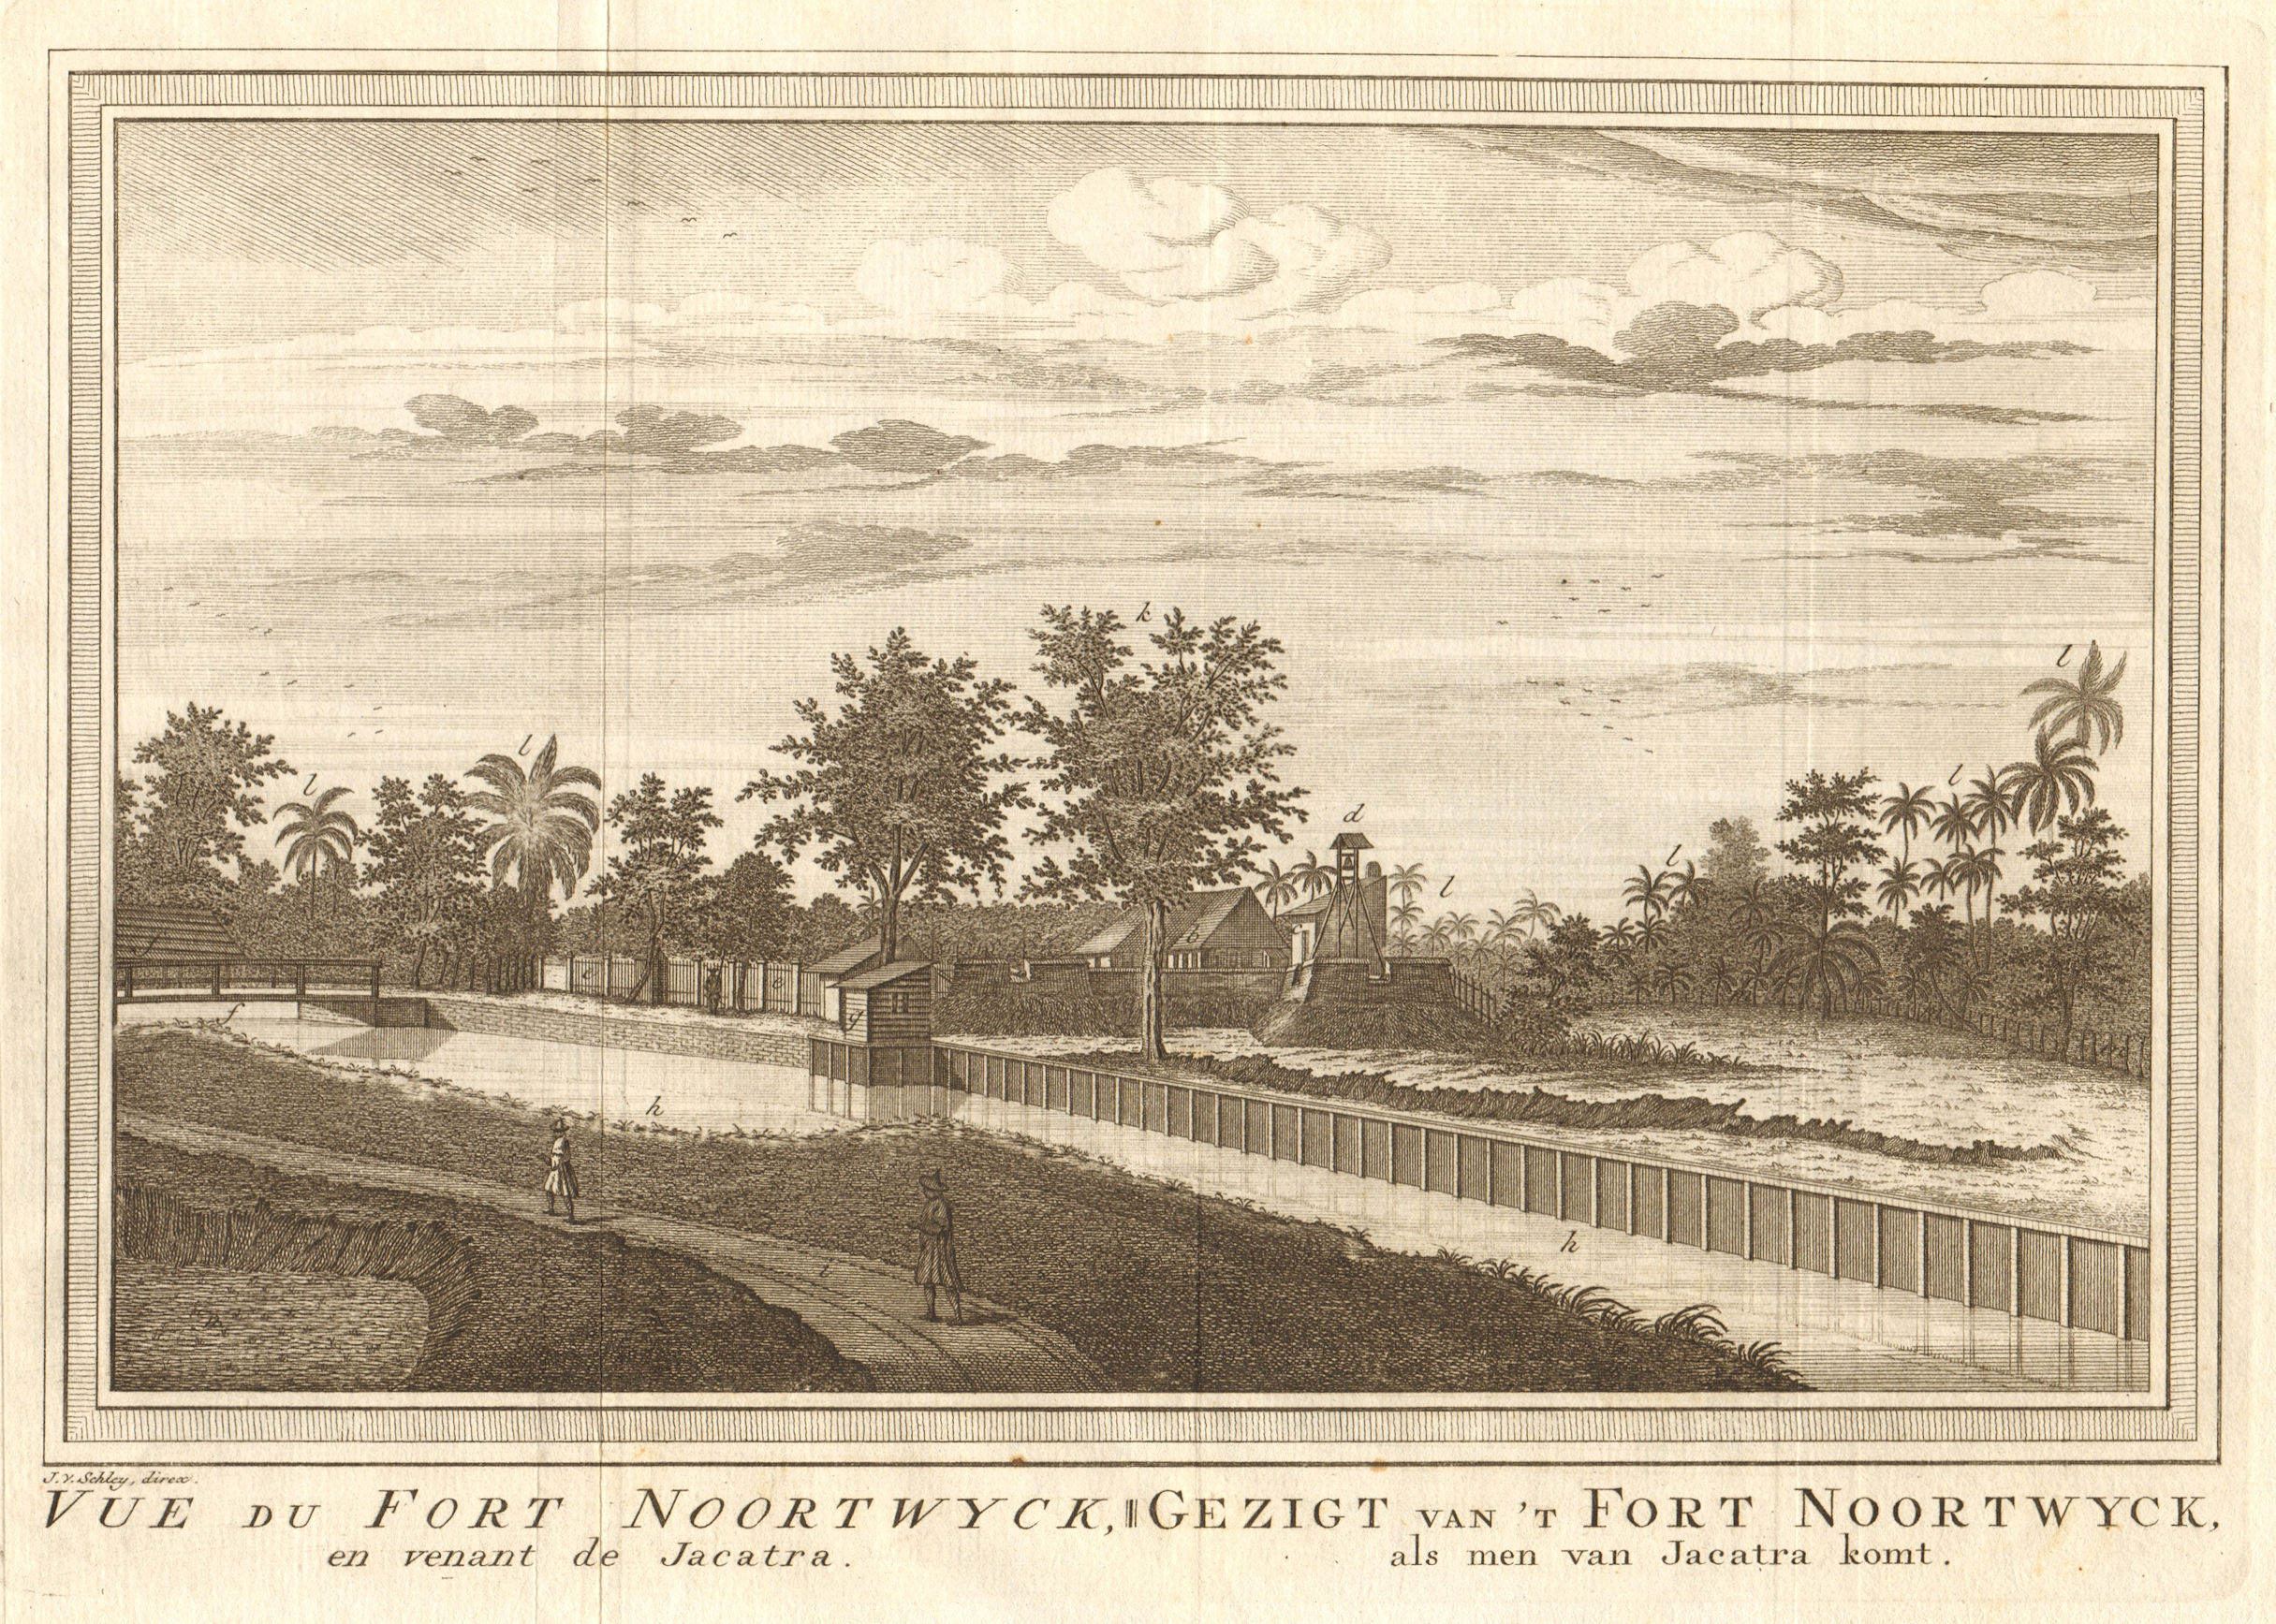 Associate Product 'Vue du Fort Noortwyck' #2. Pasar Baru, Batavia/Jakarta. Razed 1808. SCHLEY 1763